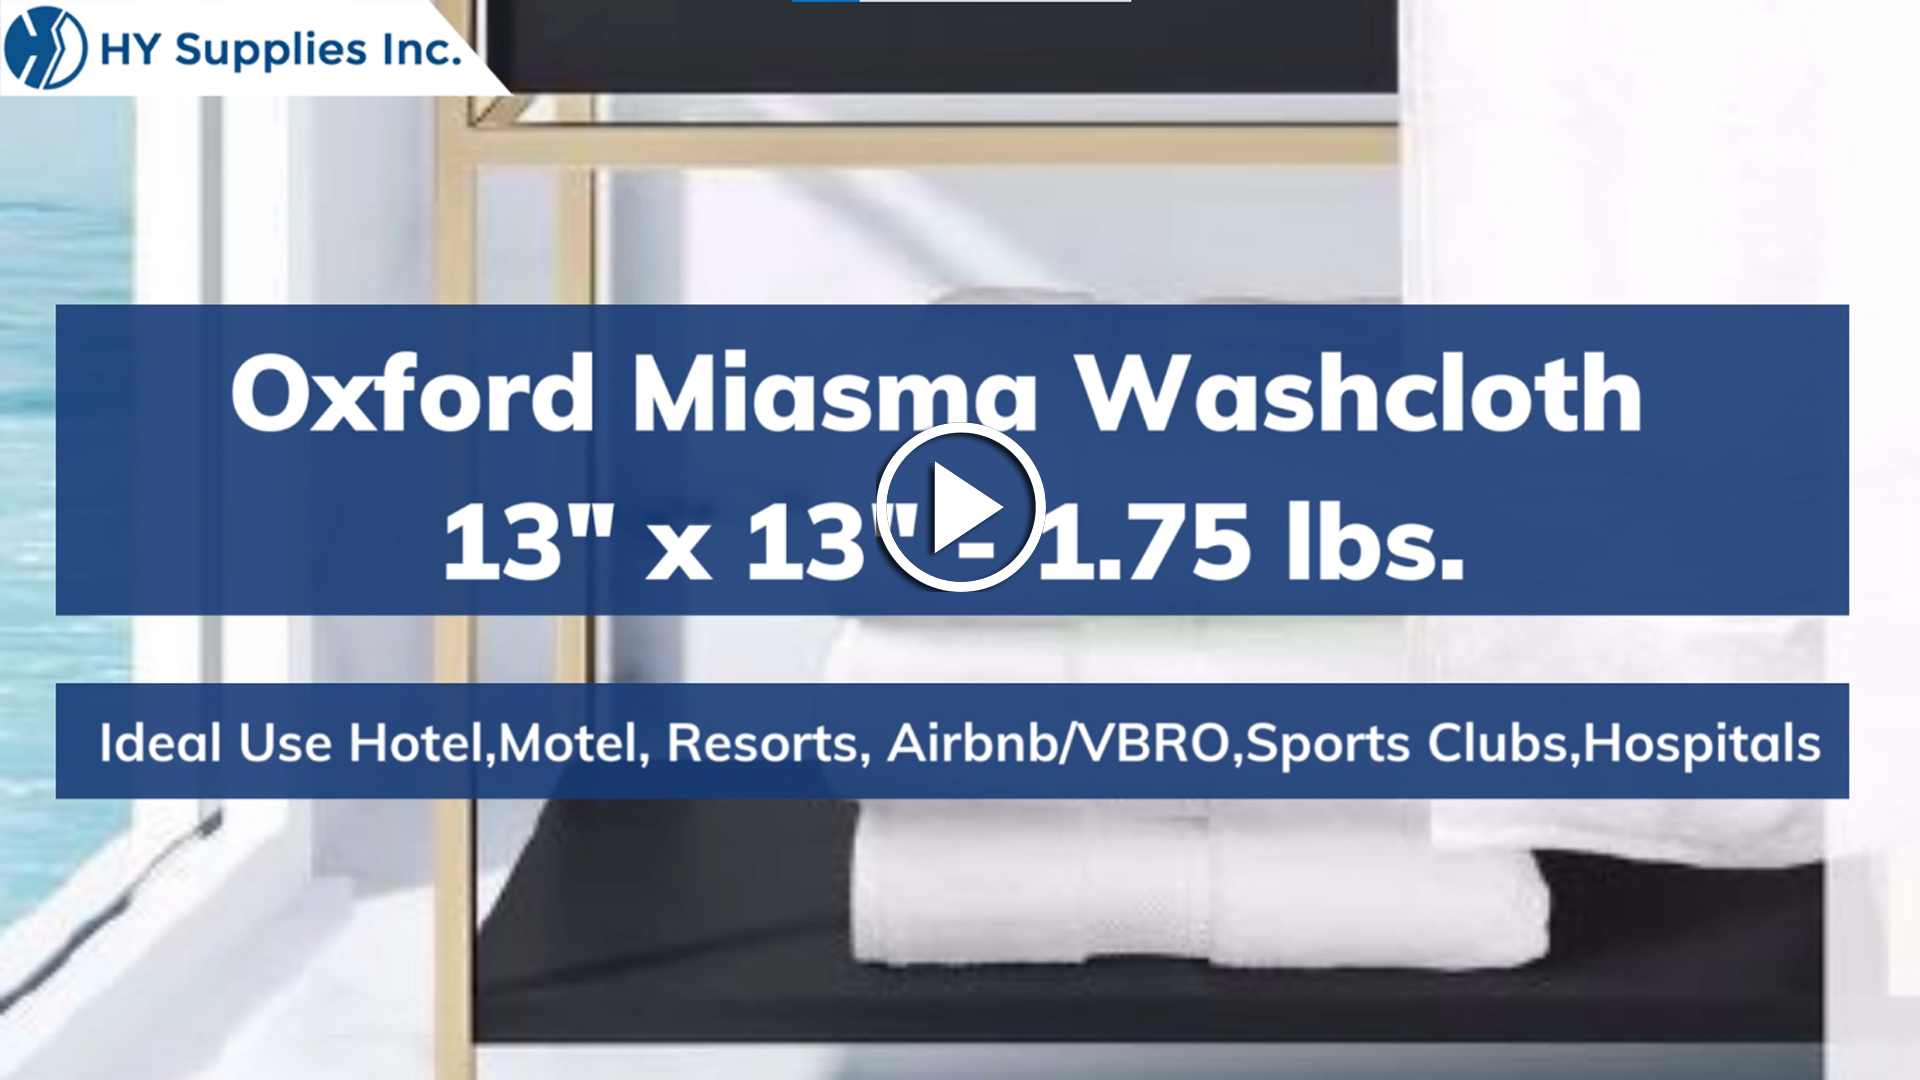 Oxford Miasma Washcloth - 13"x 13" - 1.75 lbs.